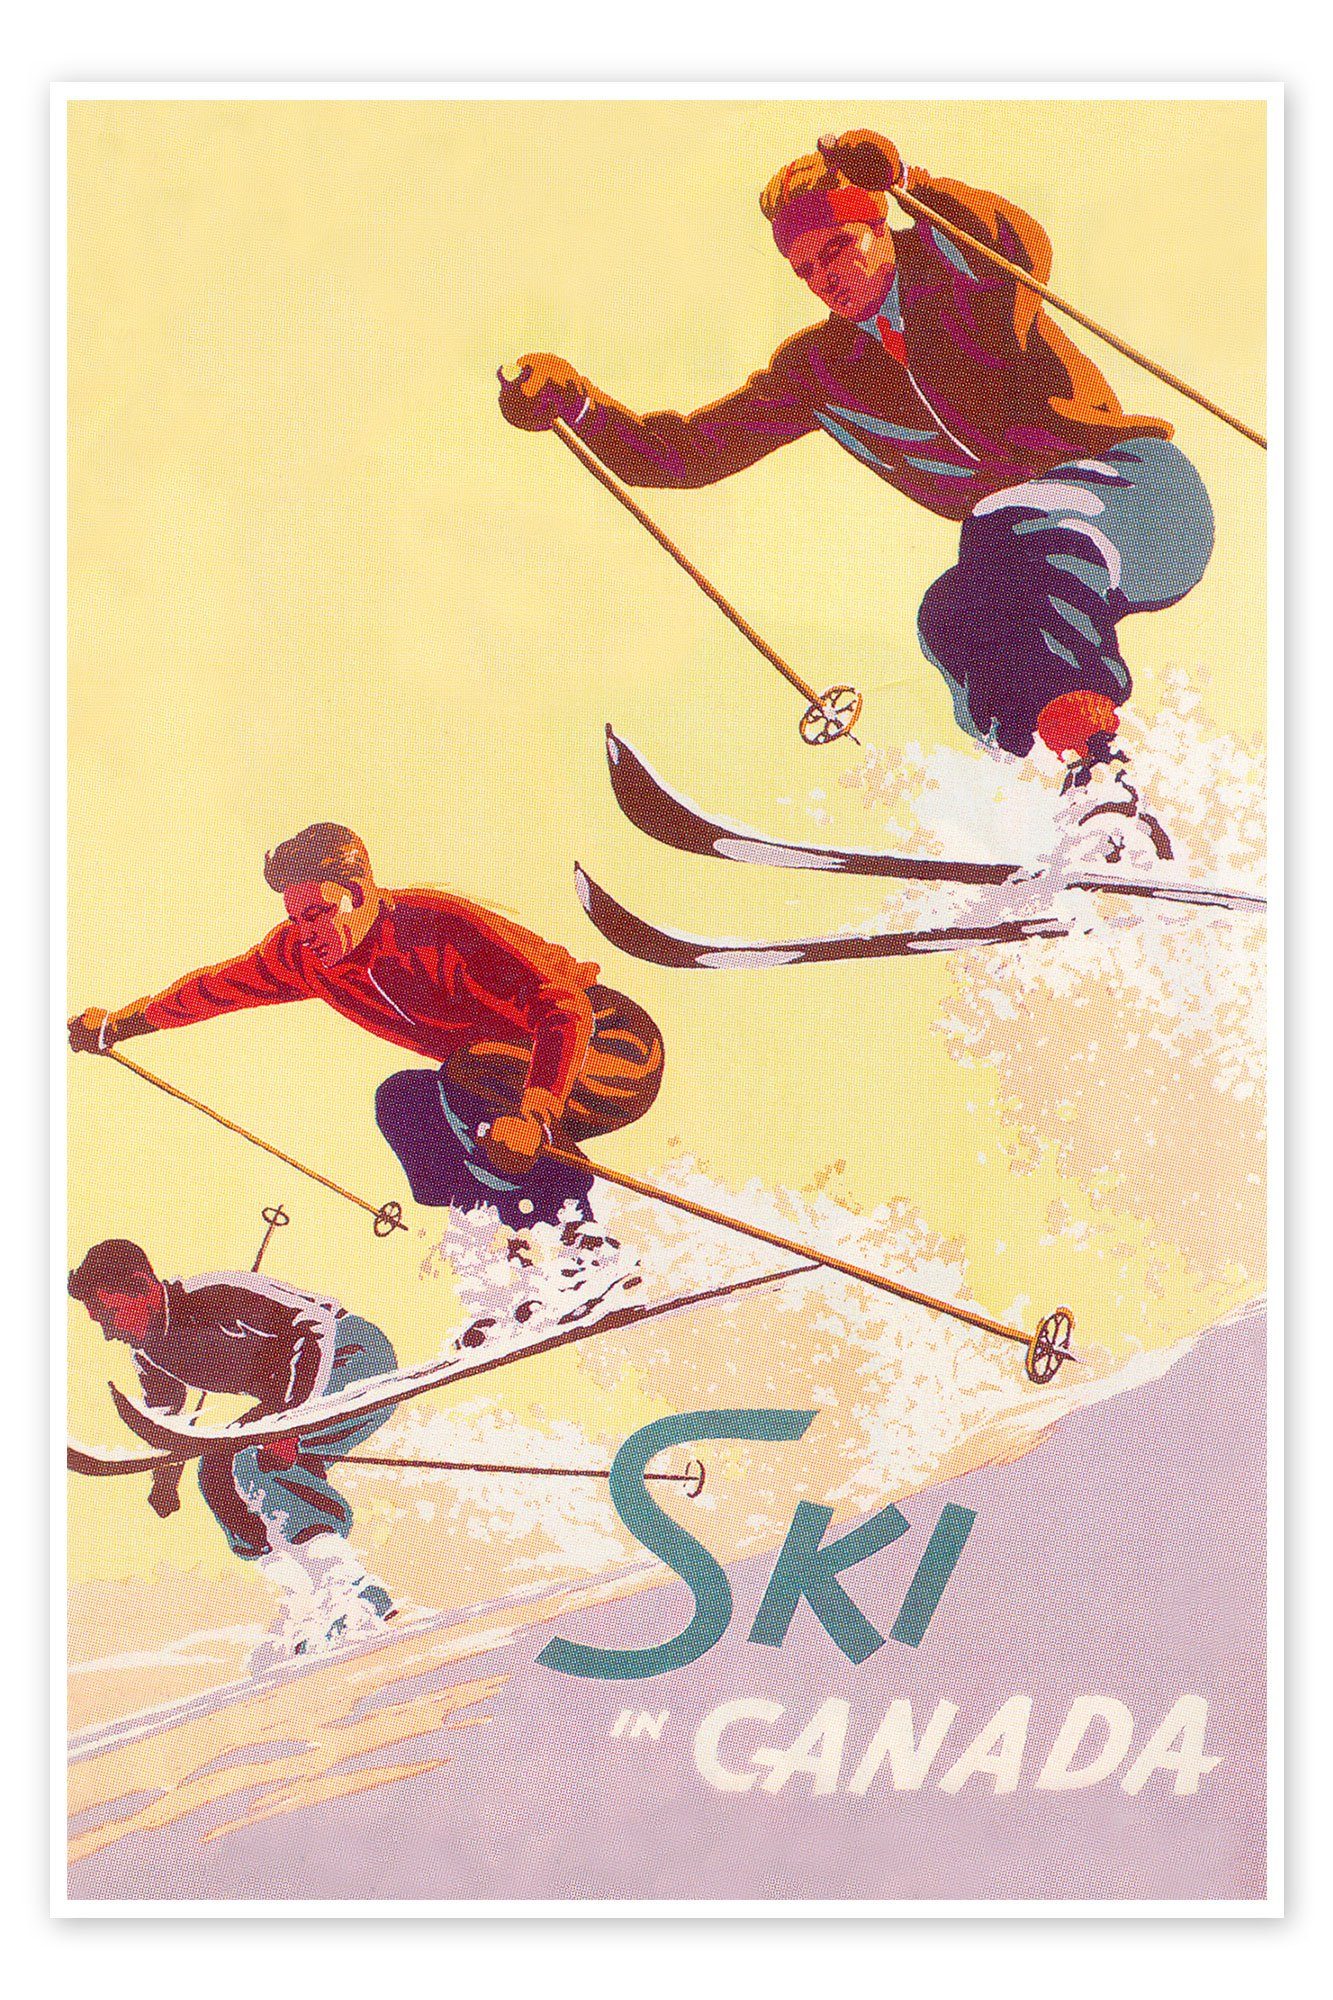 Posterlounge Poster Vintage Ski Collection, Ski in Kanada (englisch), Vintage Illustration